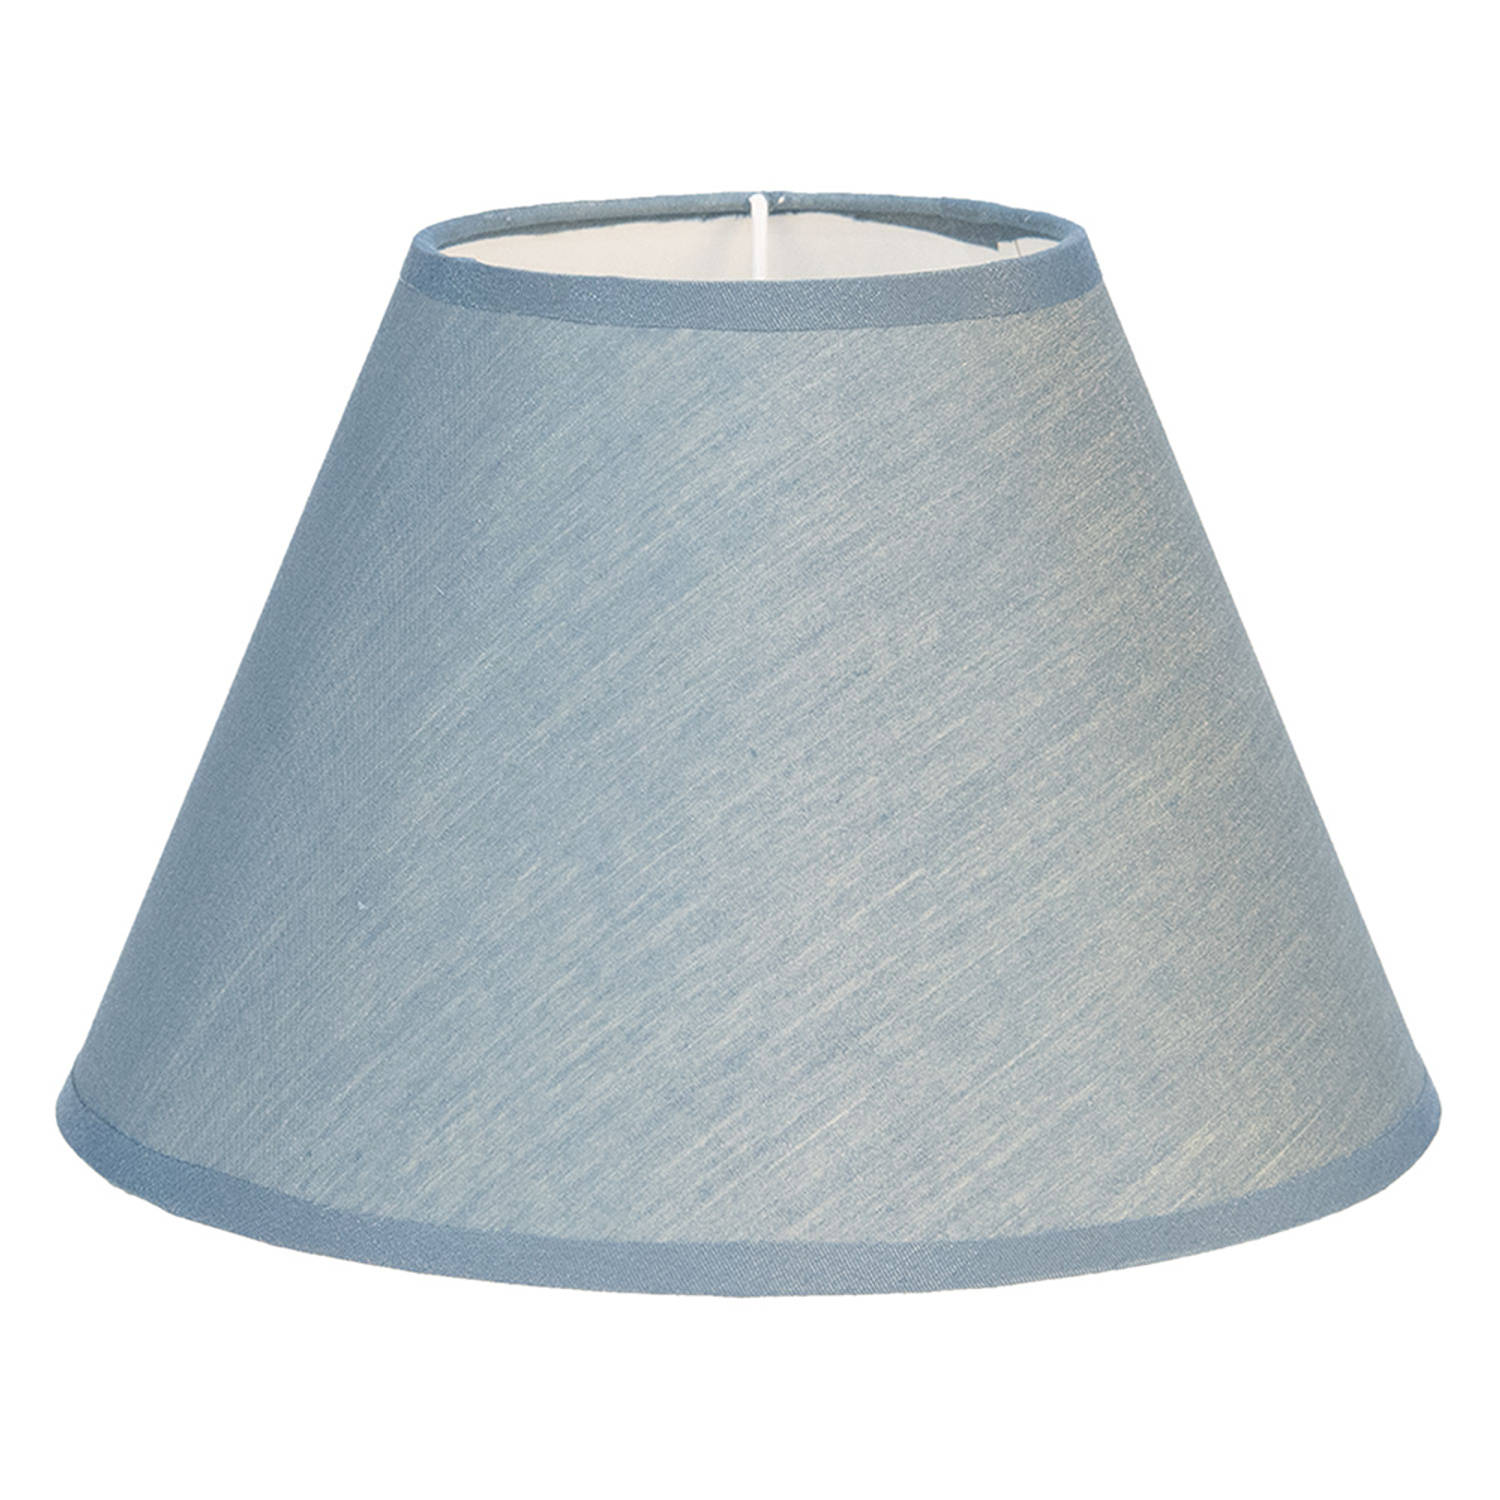 HAES DECO - Lampenkap - Modern Chic - blauw rond - formaat Ø 19x12 cm, voor Fitting E27 - Tafellamp, Hanglamp